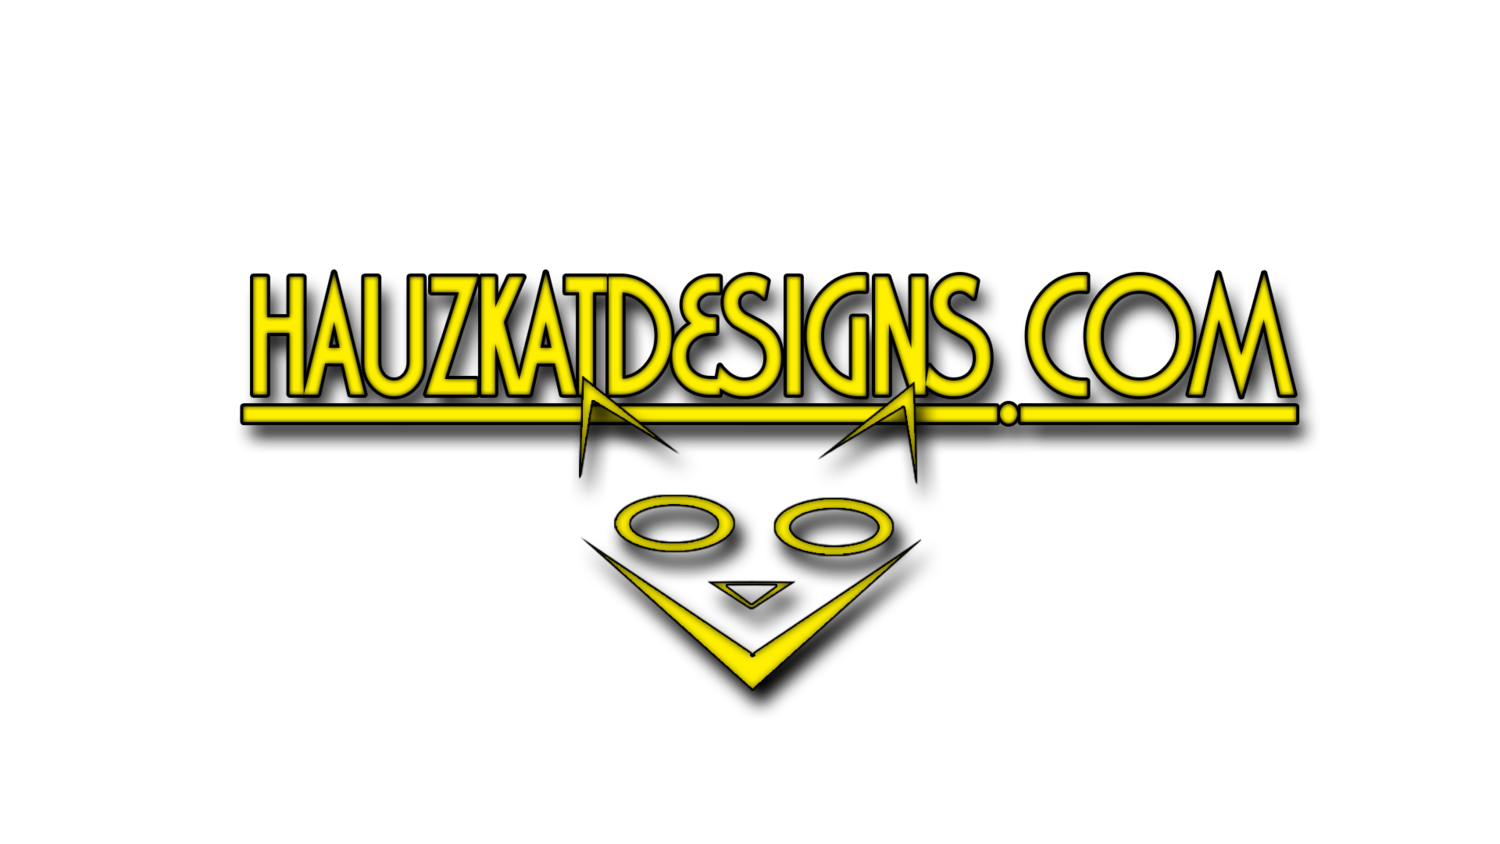 HauzKat Designs